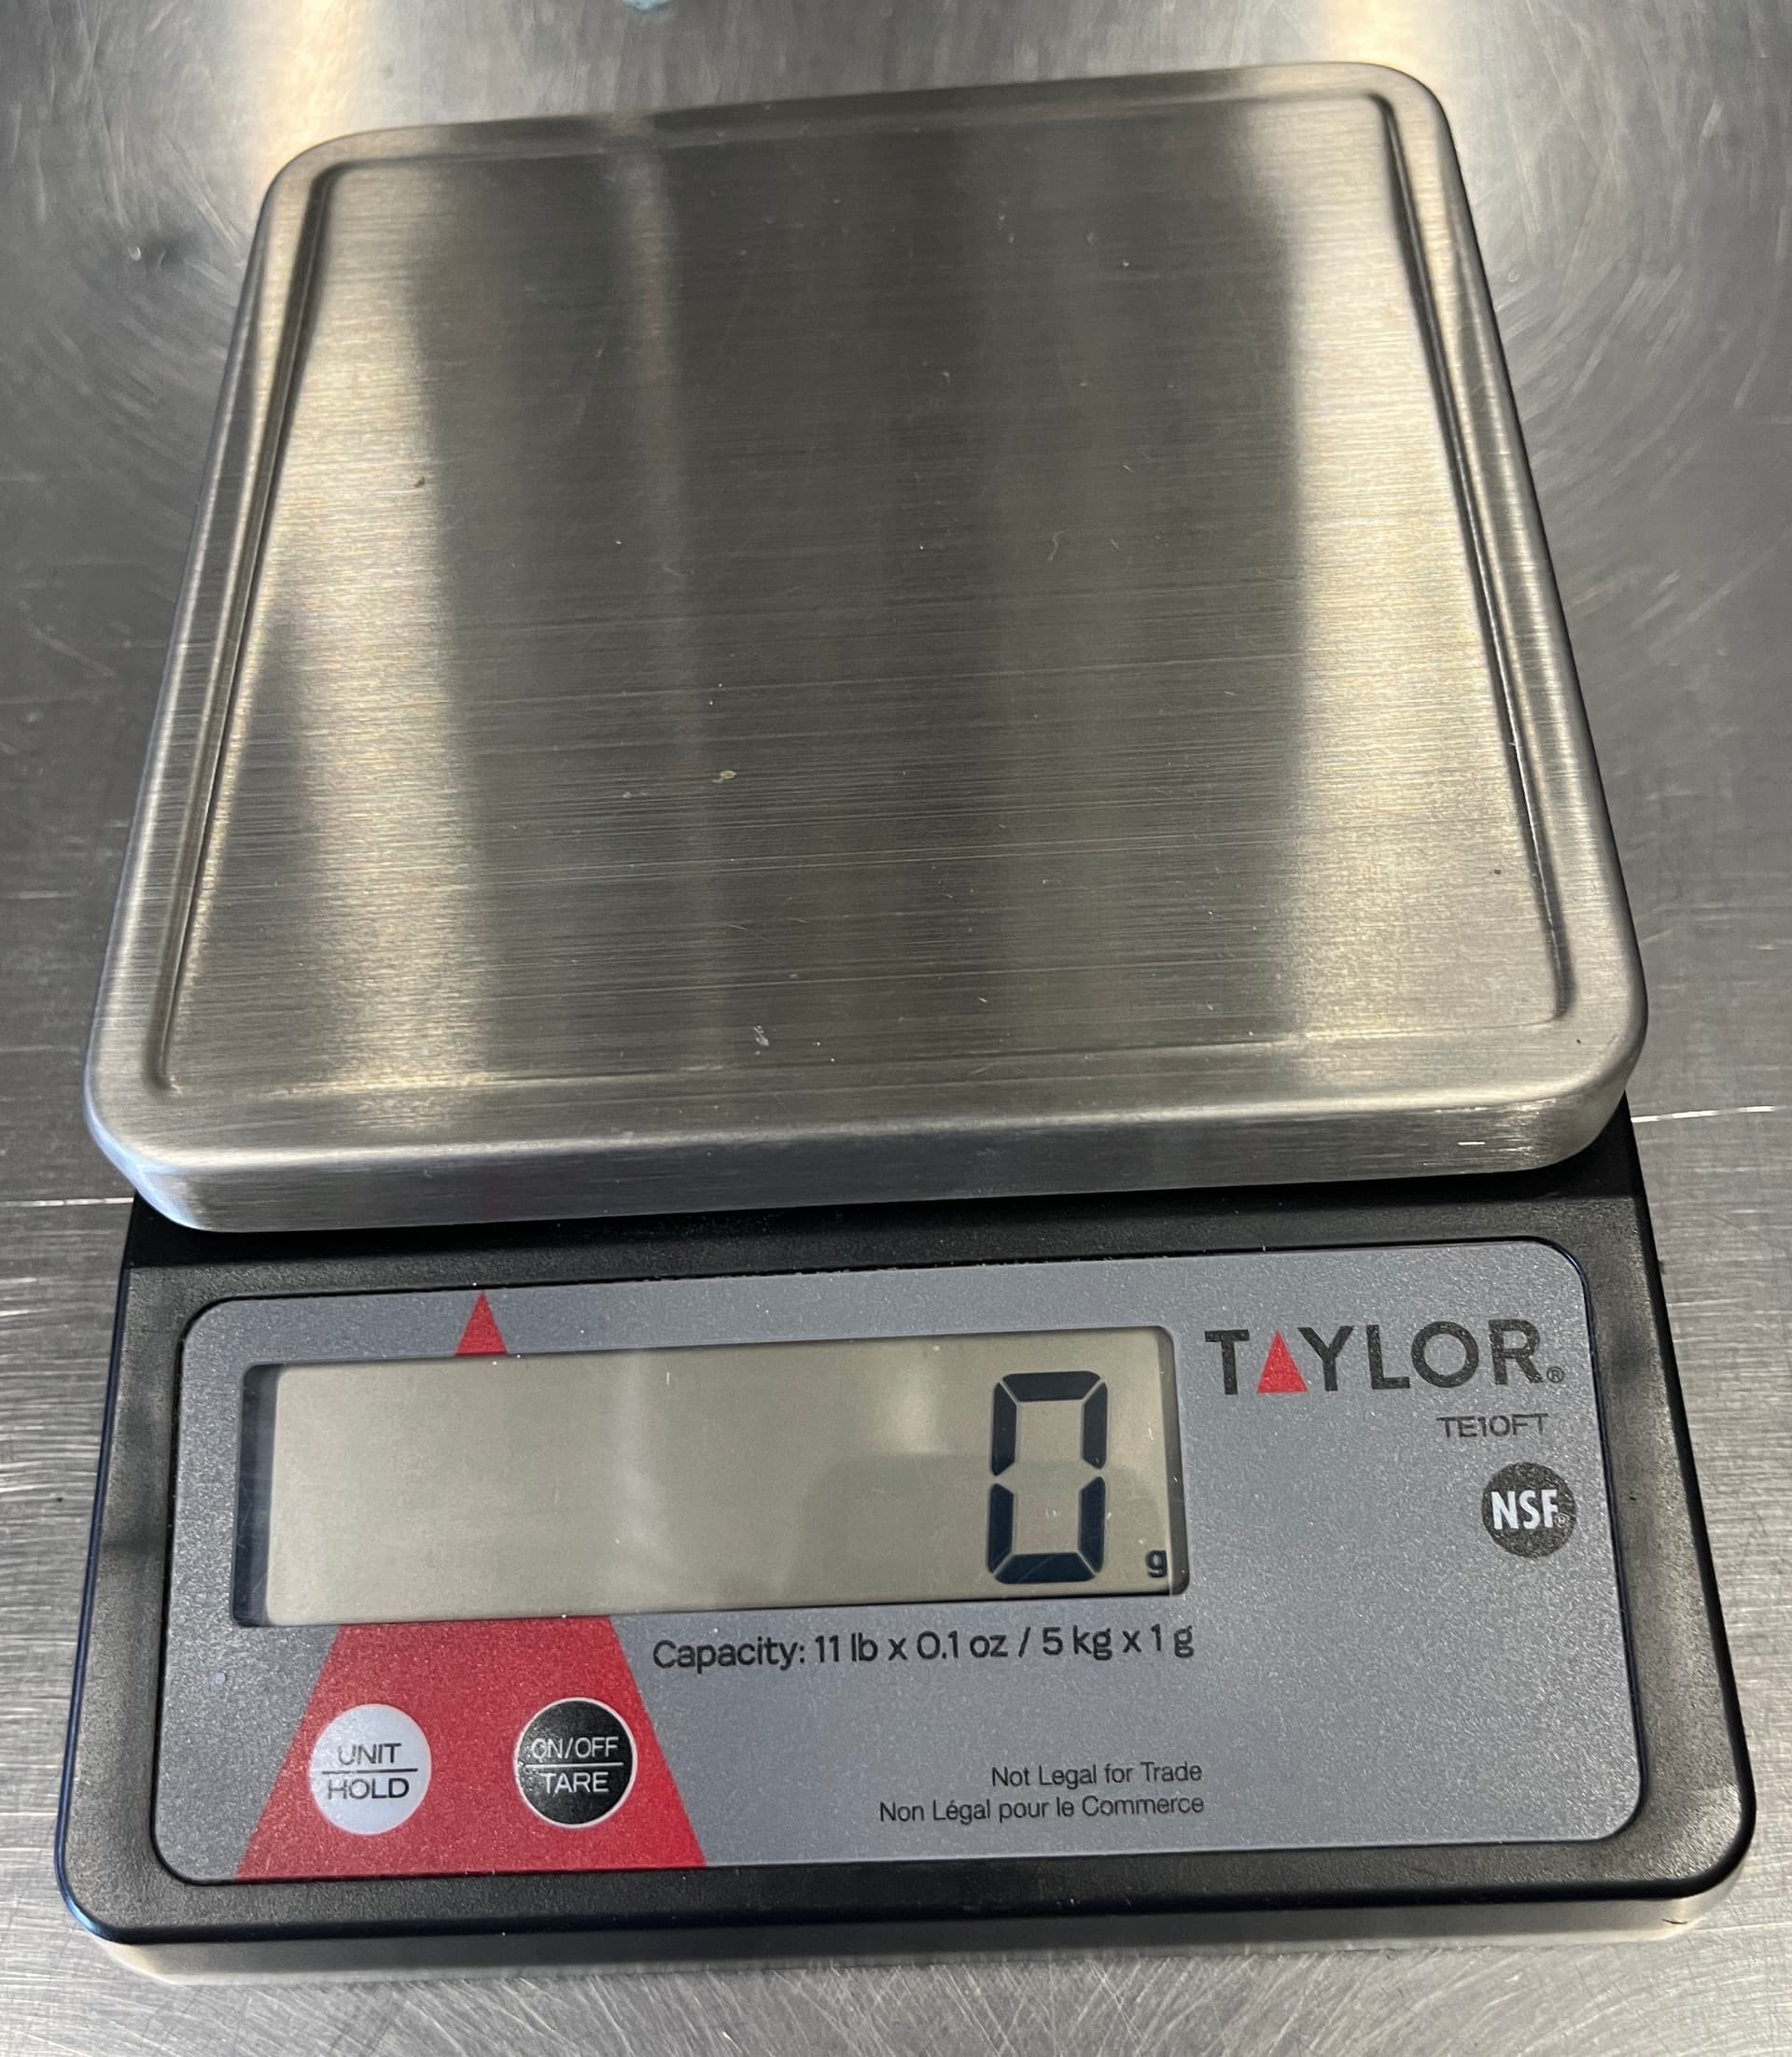 Taylor TE10FT 11 lb Digital Portion Scale